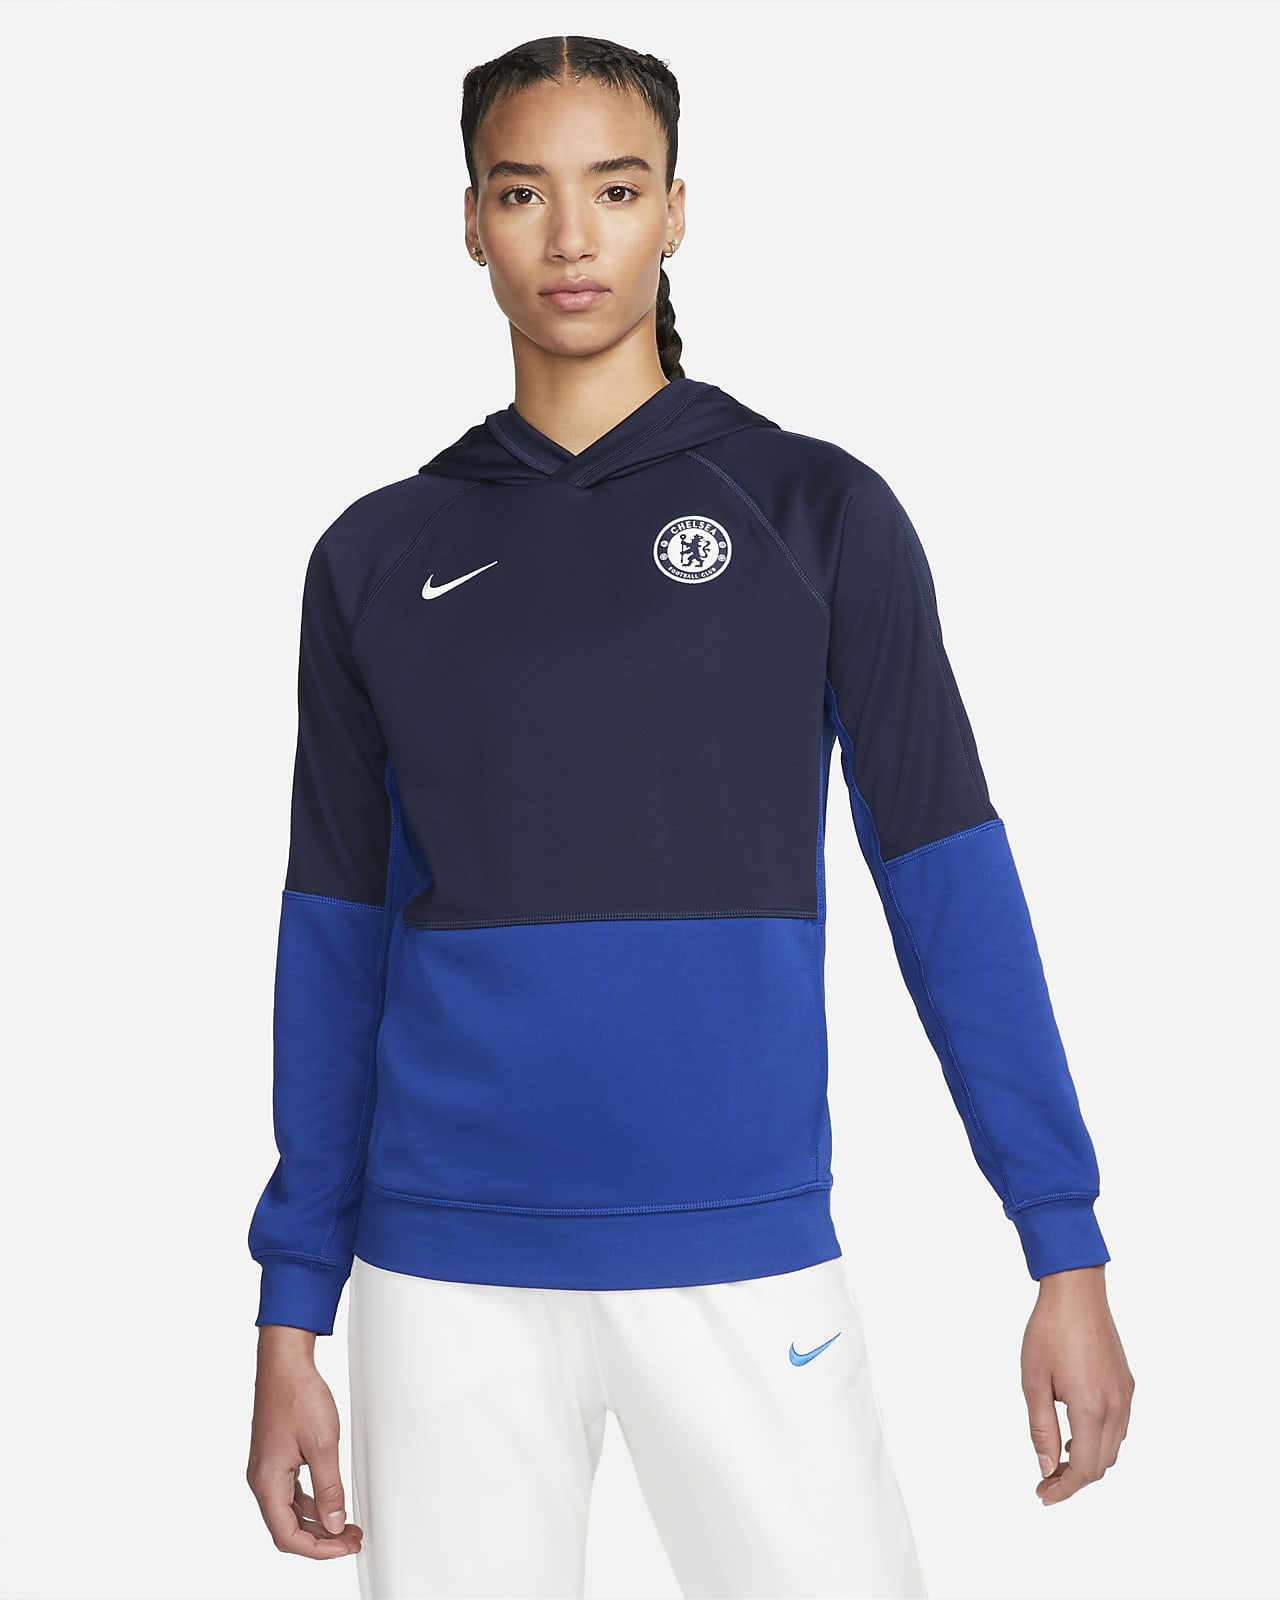 Chelsea F.C. Women's Nike Dri-FIT Pullover Hoodie